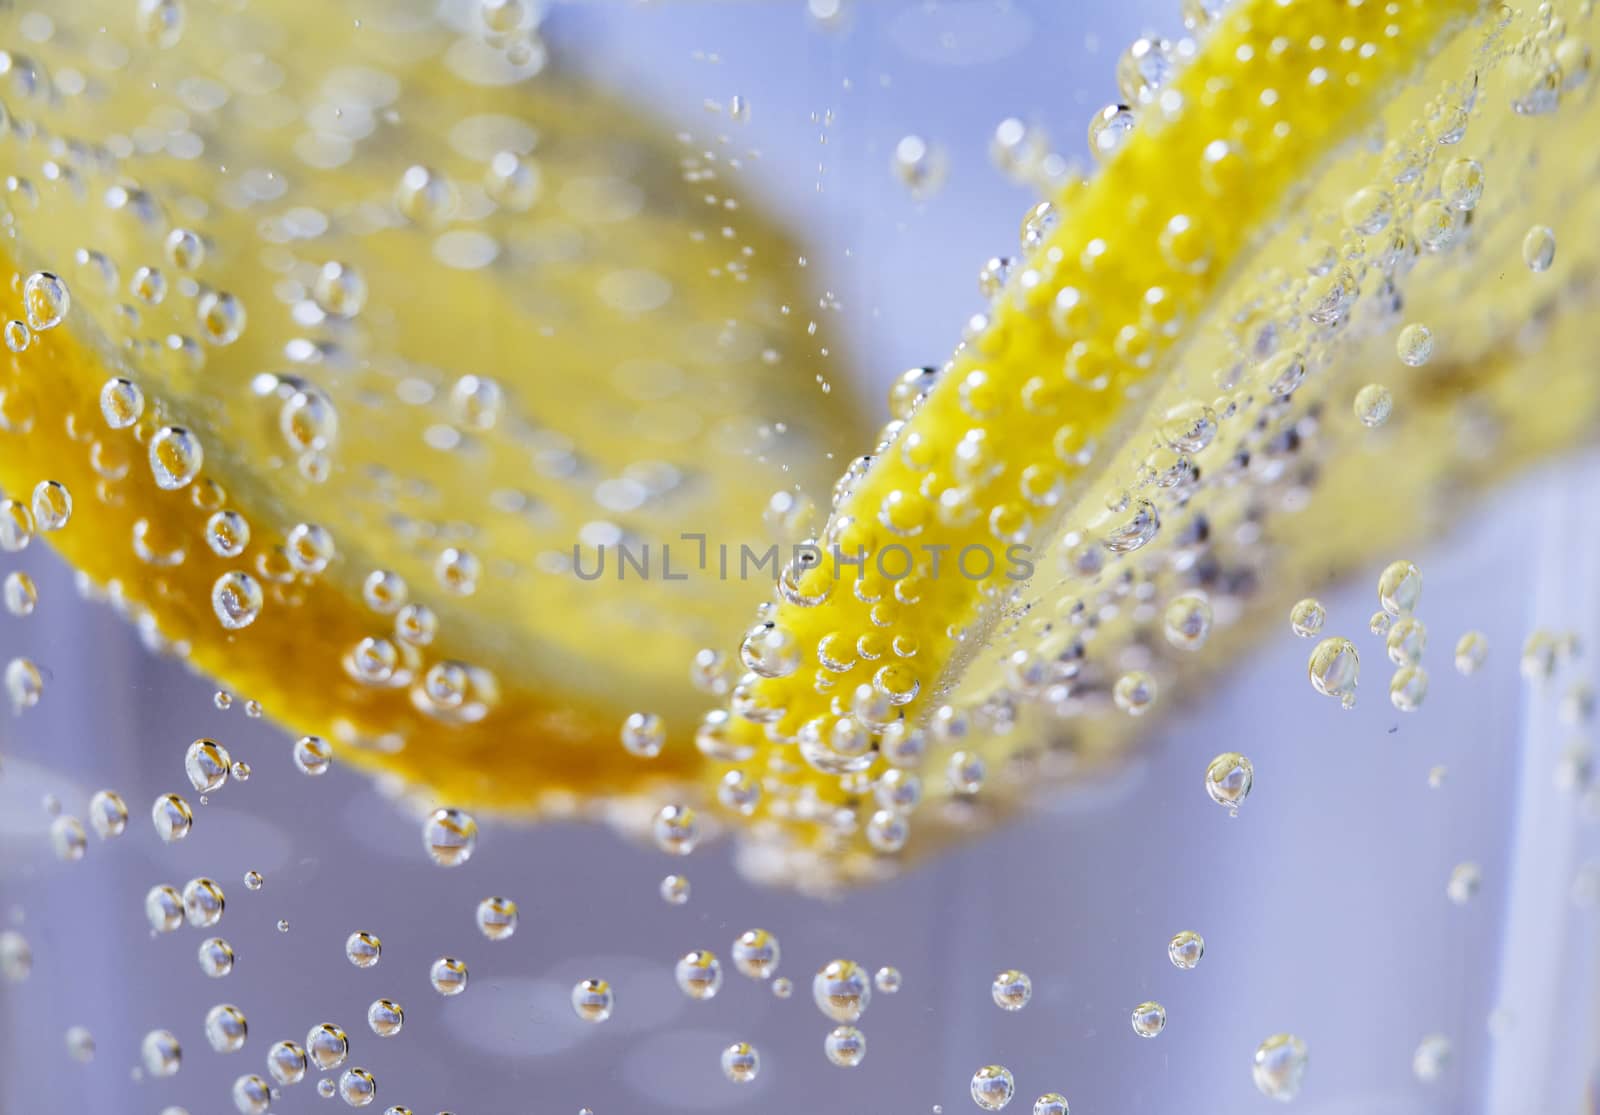 Lemon Slices in Clear Soda Water (Bubble Background Macro) by leieng